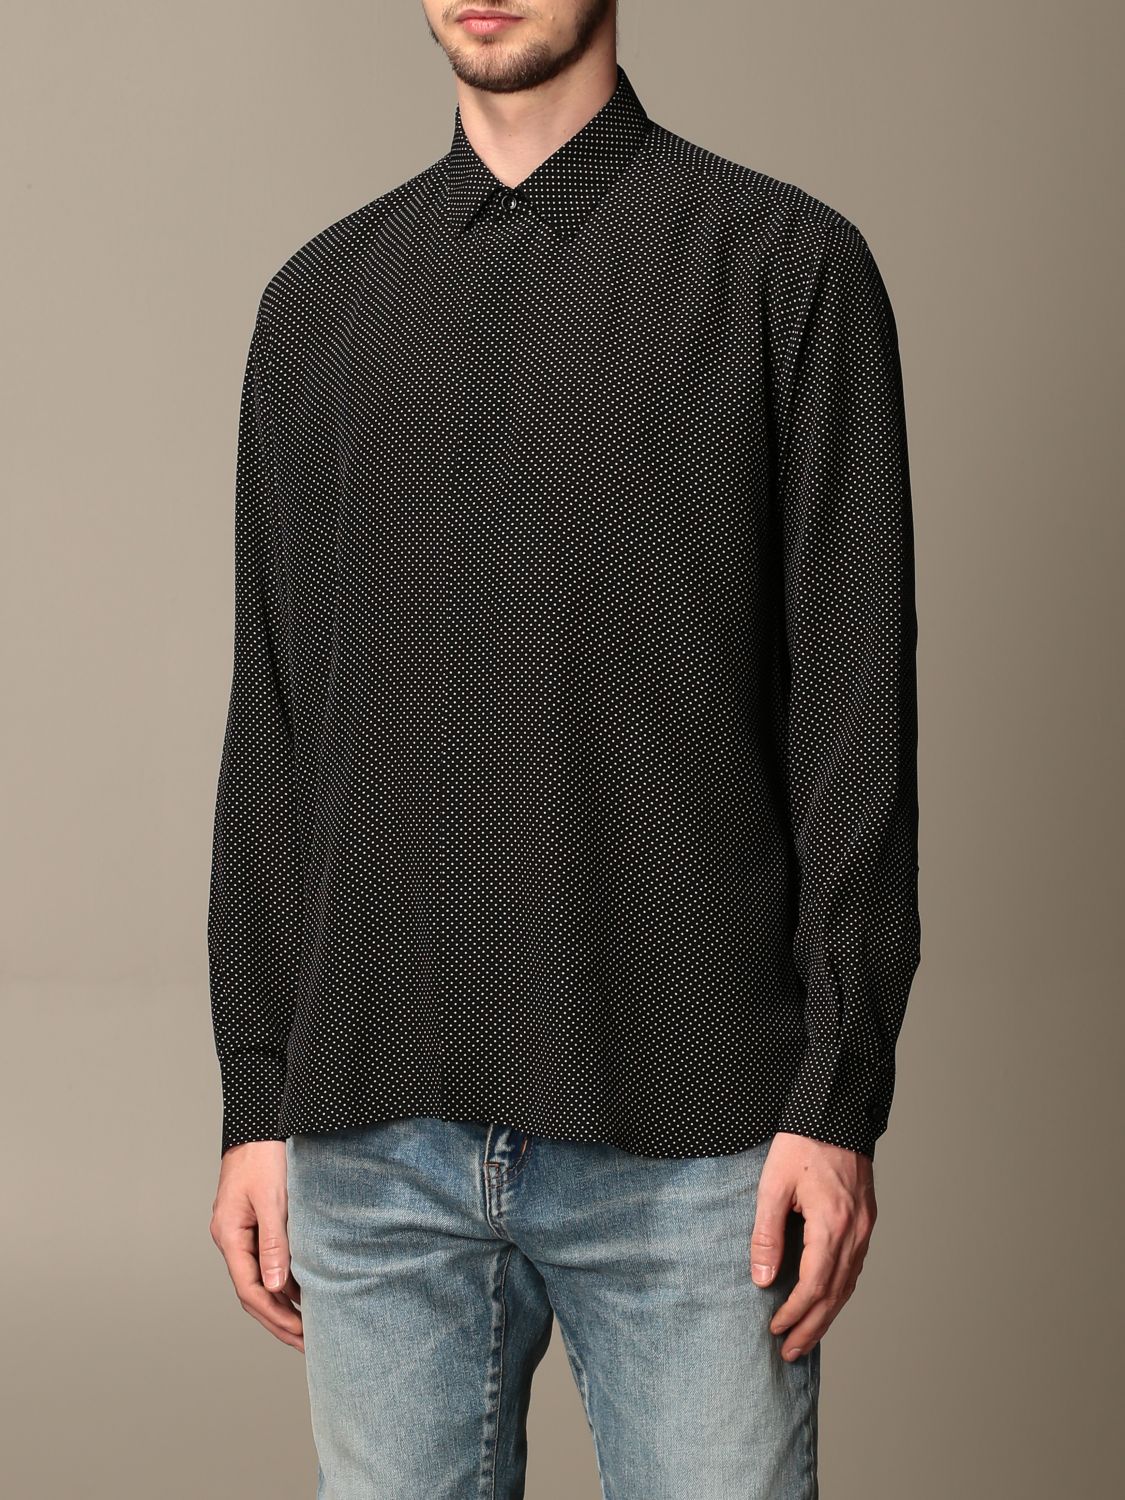 SAINT LAURENT: shirt in micro polka dot silk - Black | Saint Laurent ...